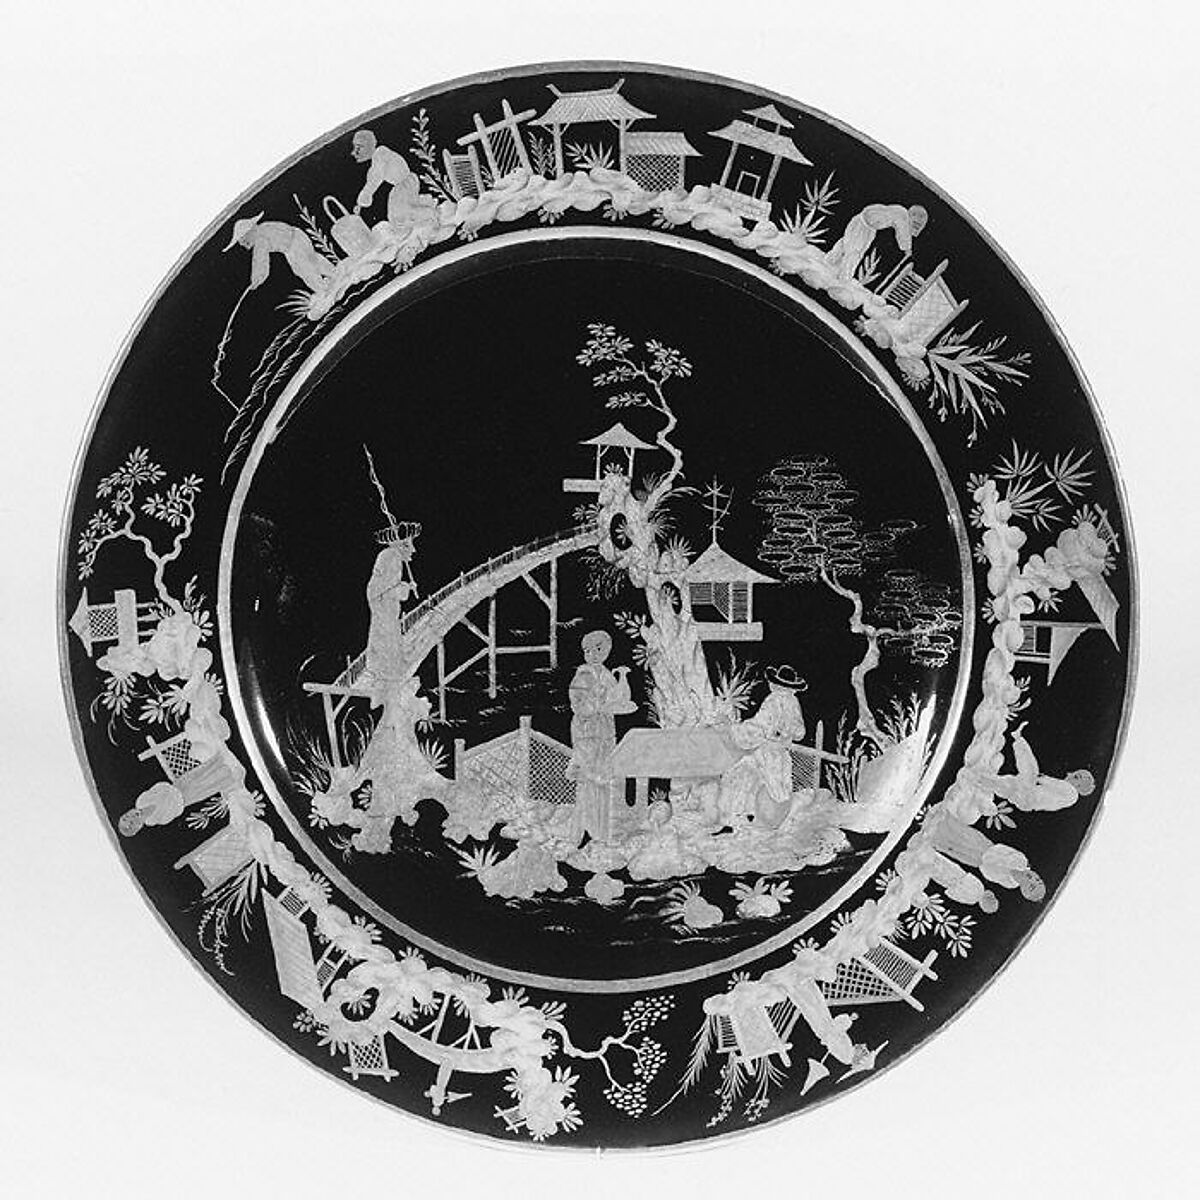 Plate, Sèvres Manufactory (French, 1740–present), Hard-paste porcelain, French, Sèvres 